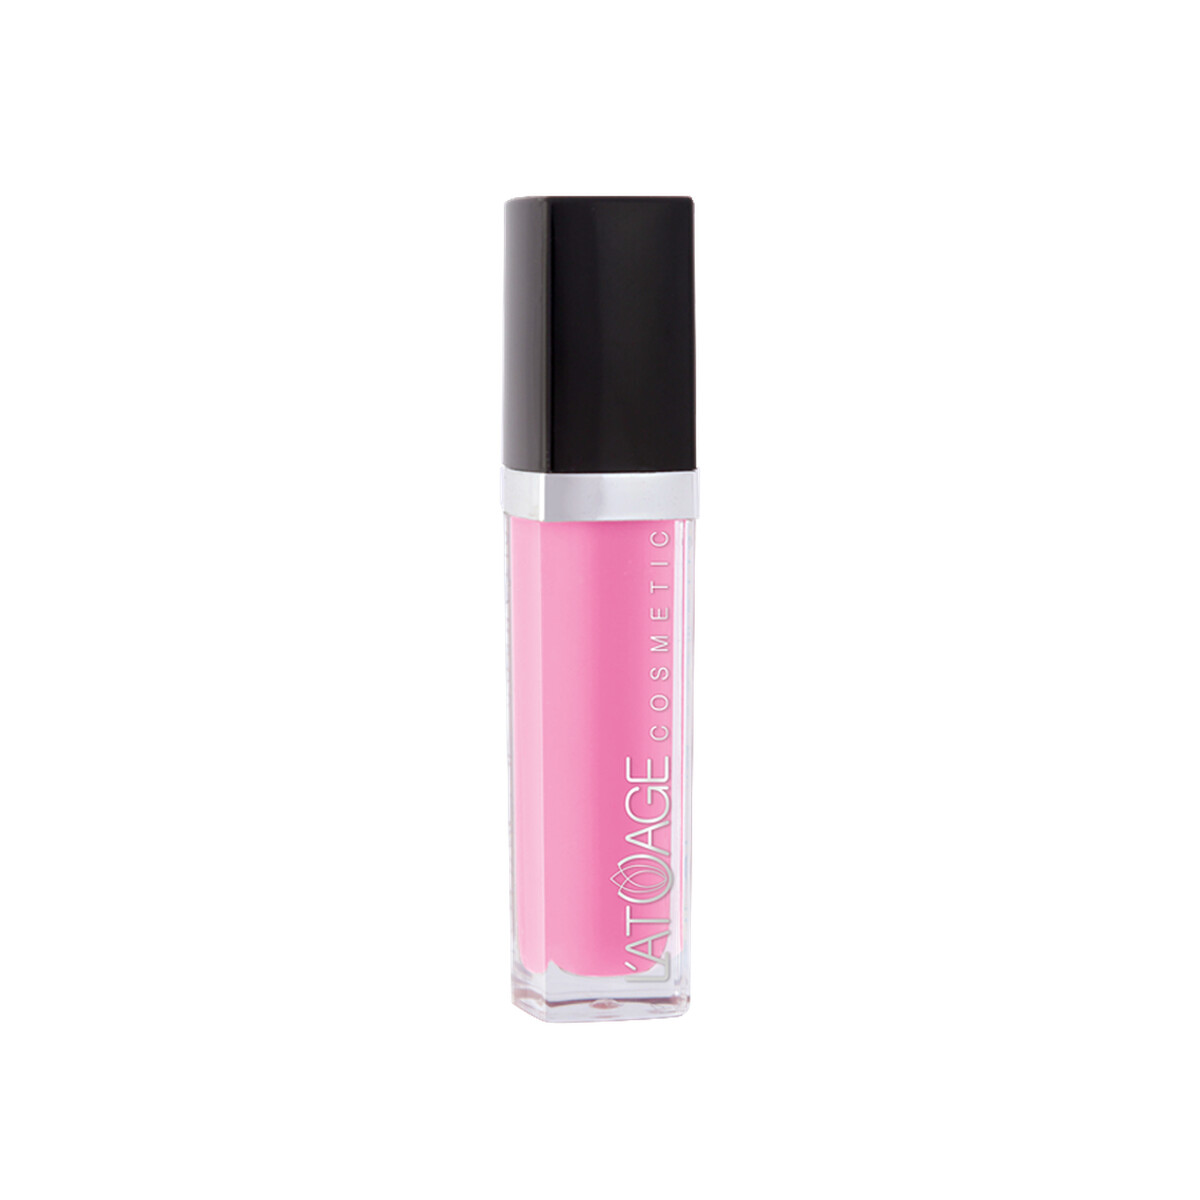 Блеск для губ magnetic lips 6 г тон 113 L'ATUAGE cosmetic, цвет розовый 07914903 - фото 2